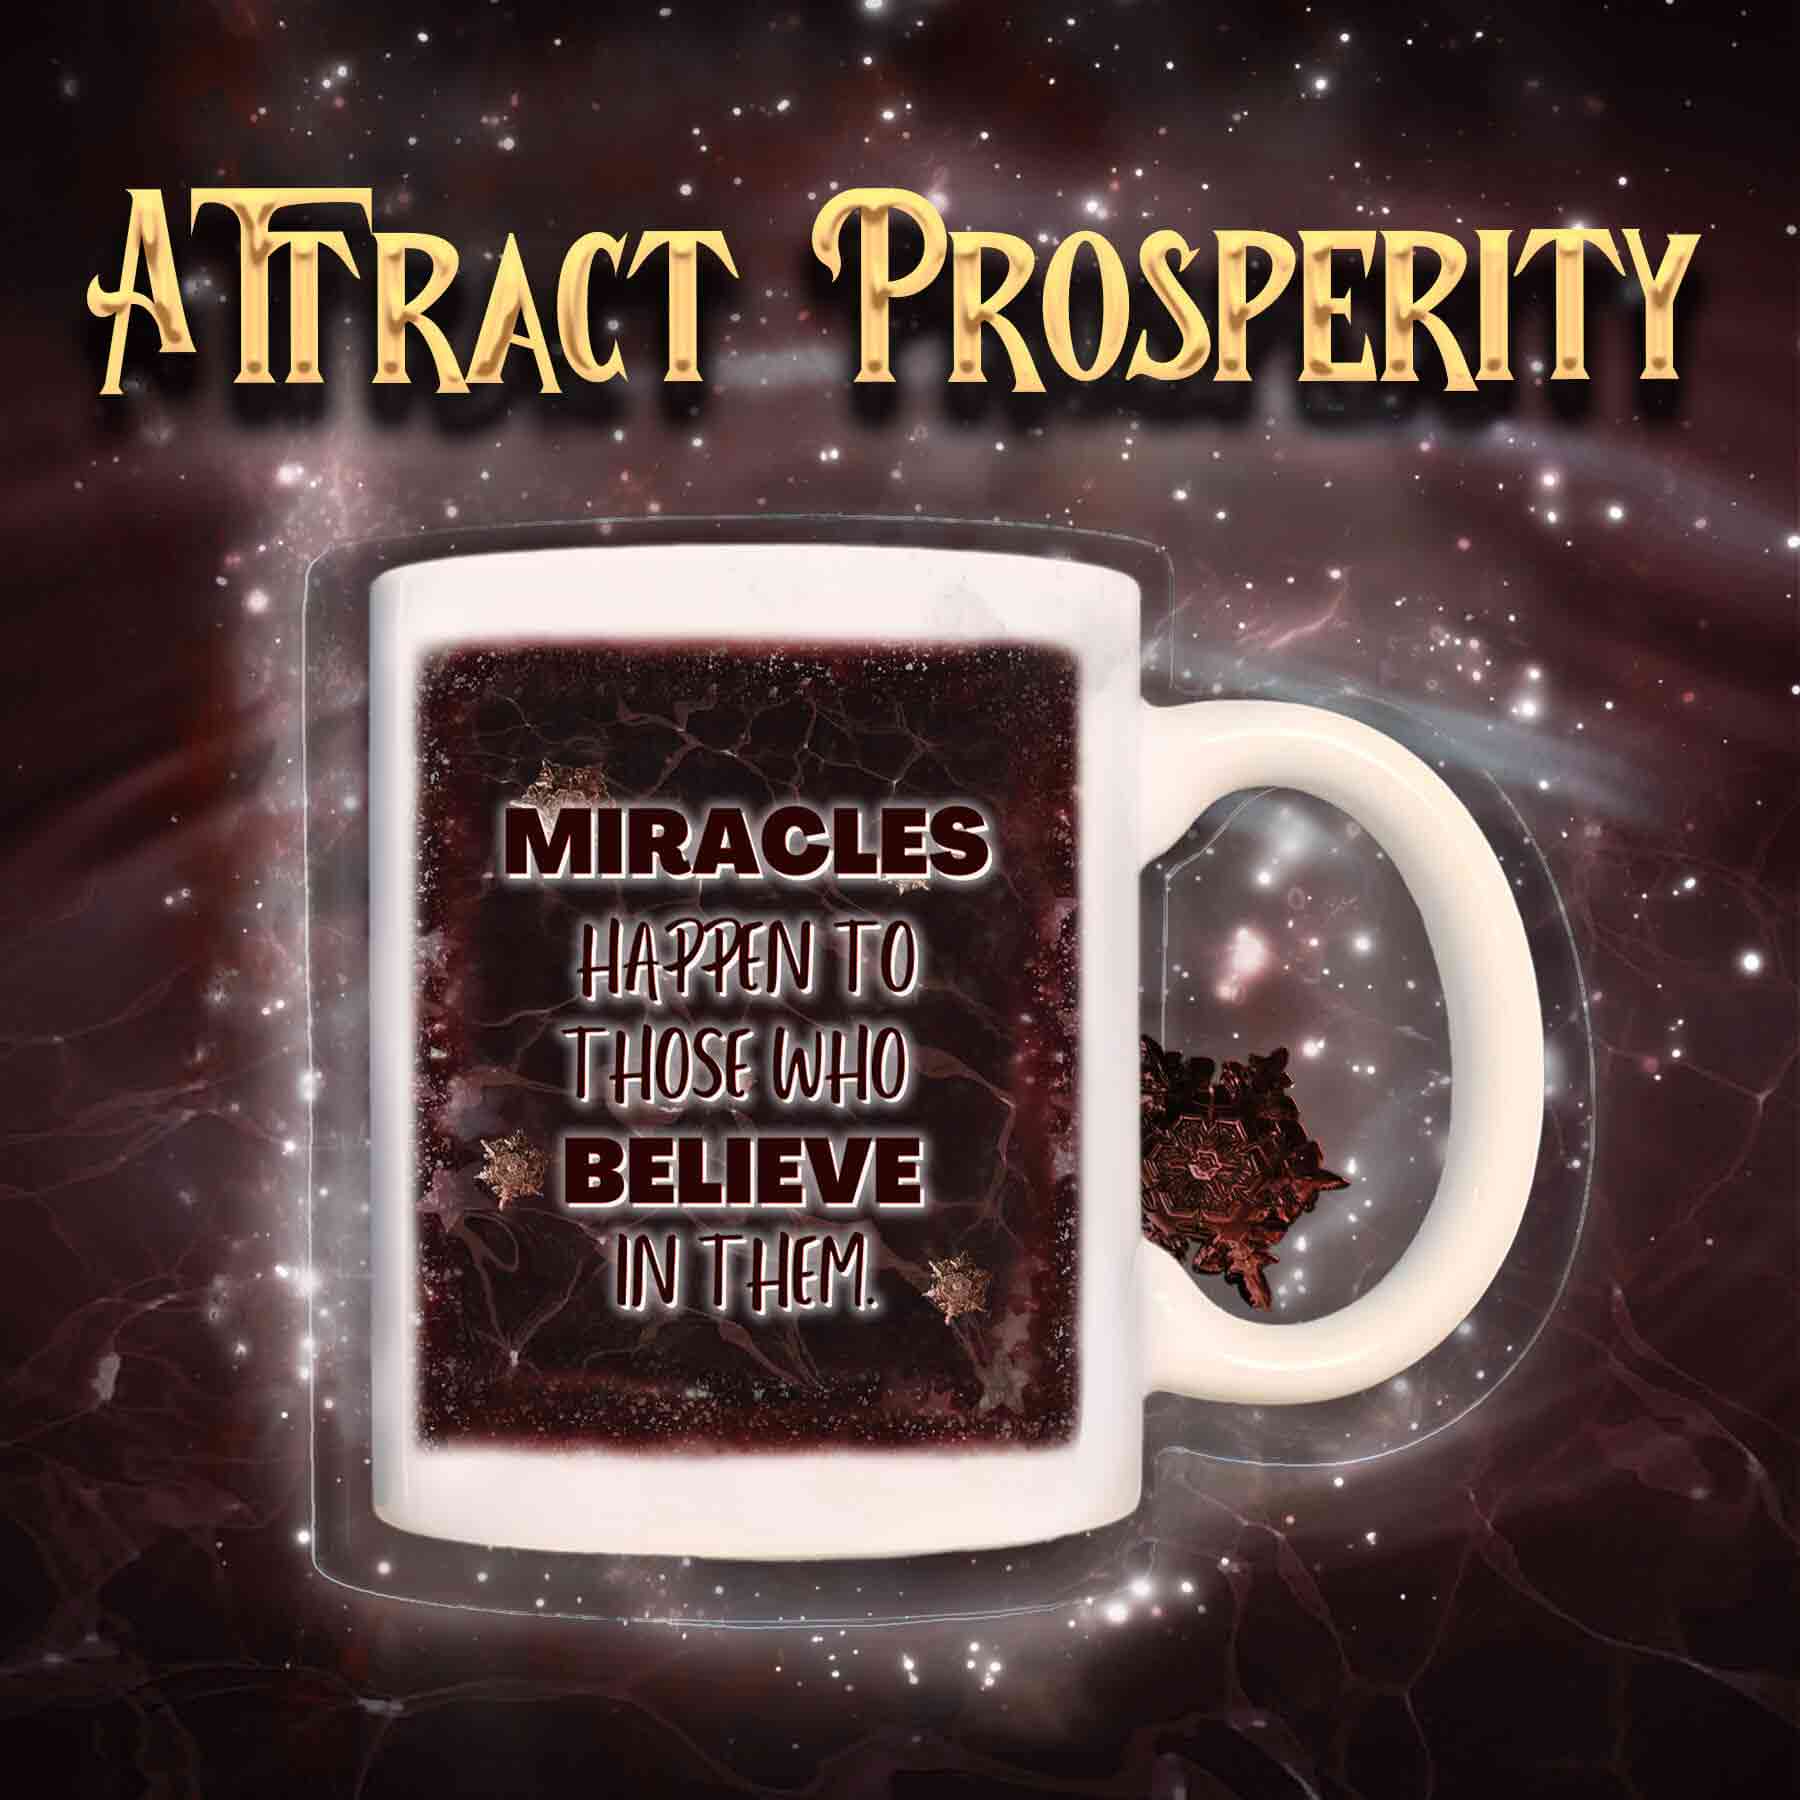 Miracles-Happen motivational mug